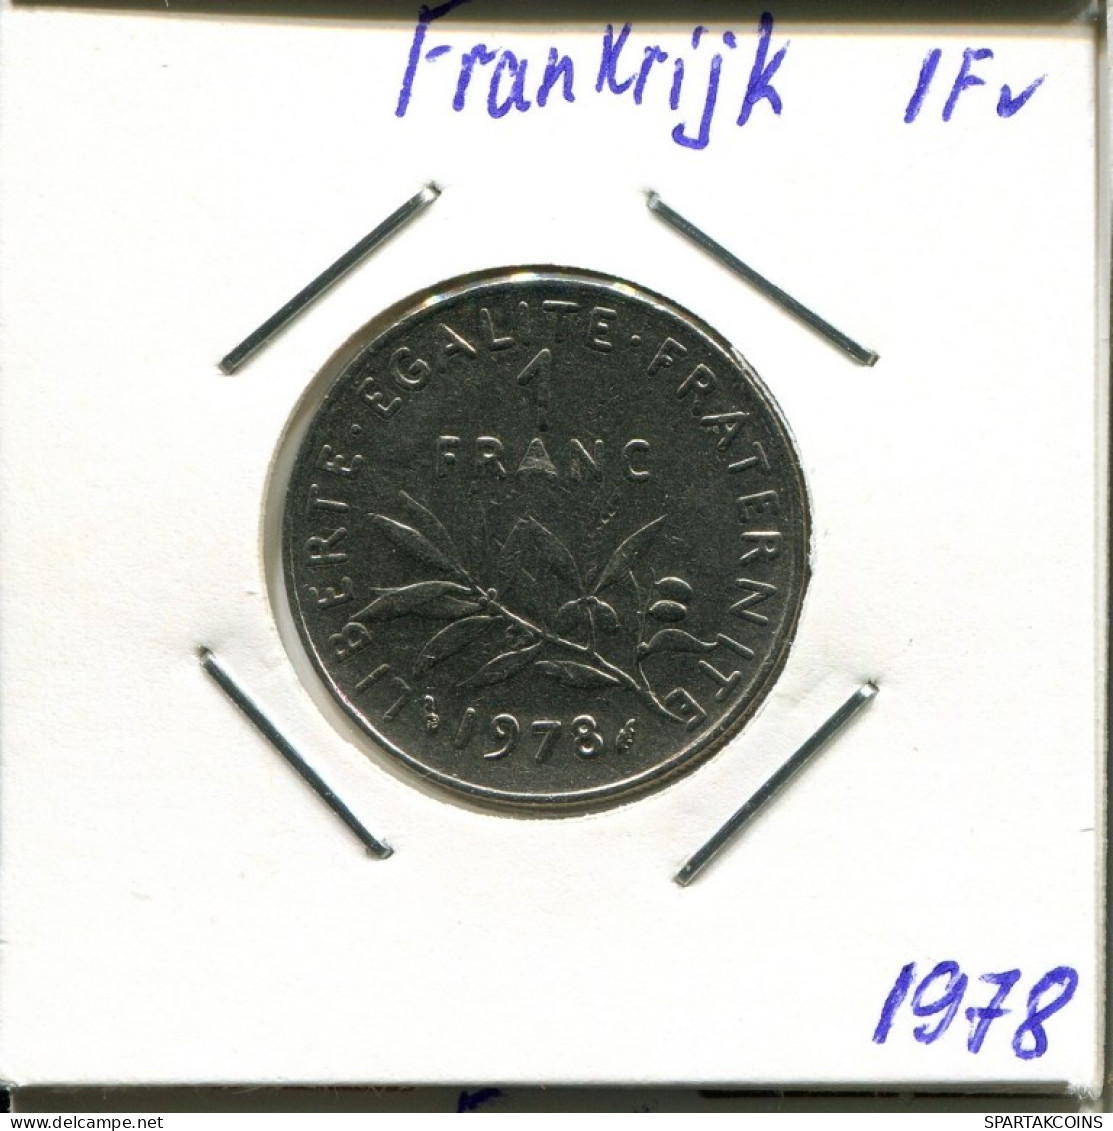 1 FRANC 1978 FRANCE Coin French Coin #AM575.U.A - 1 Franc